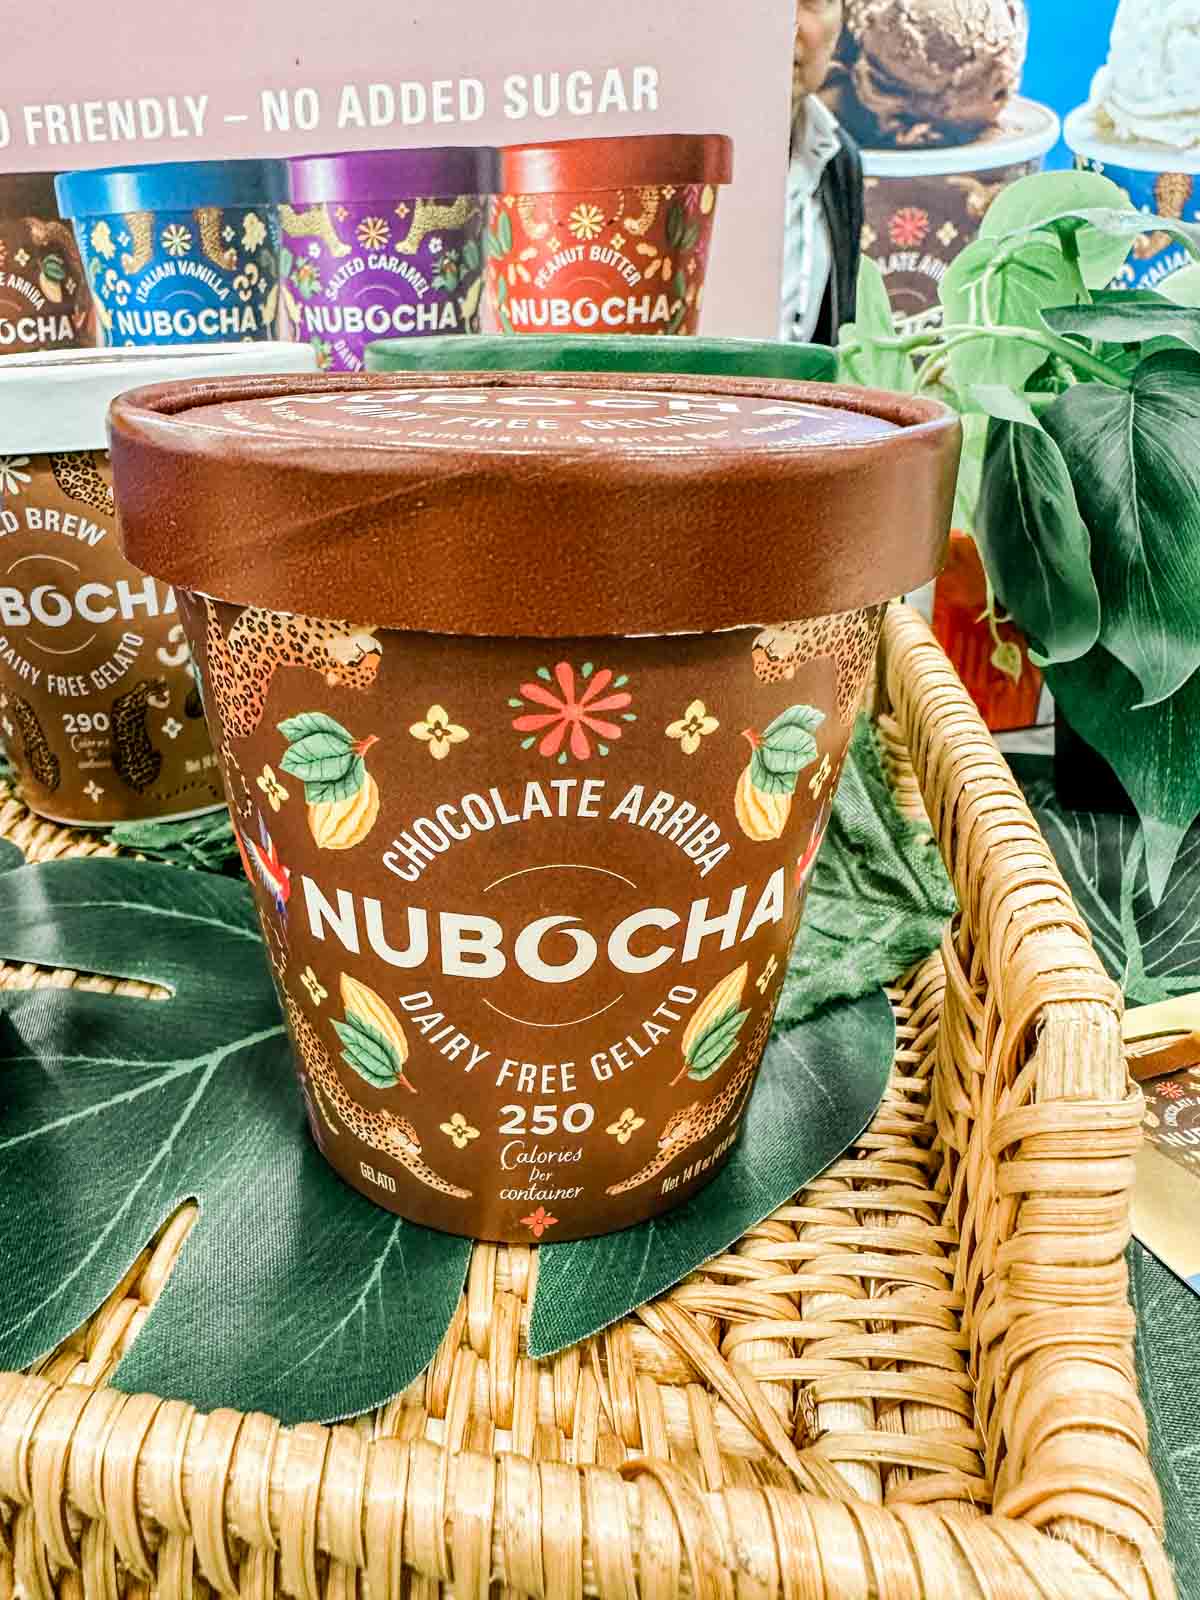 A carton of Nubocha brand vegan gelato.